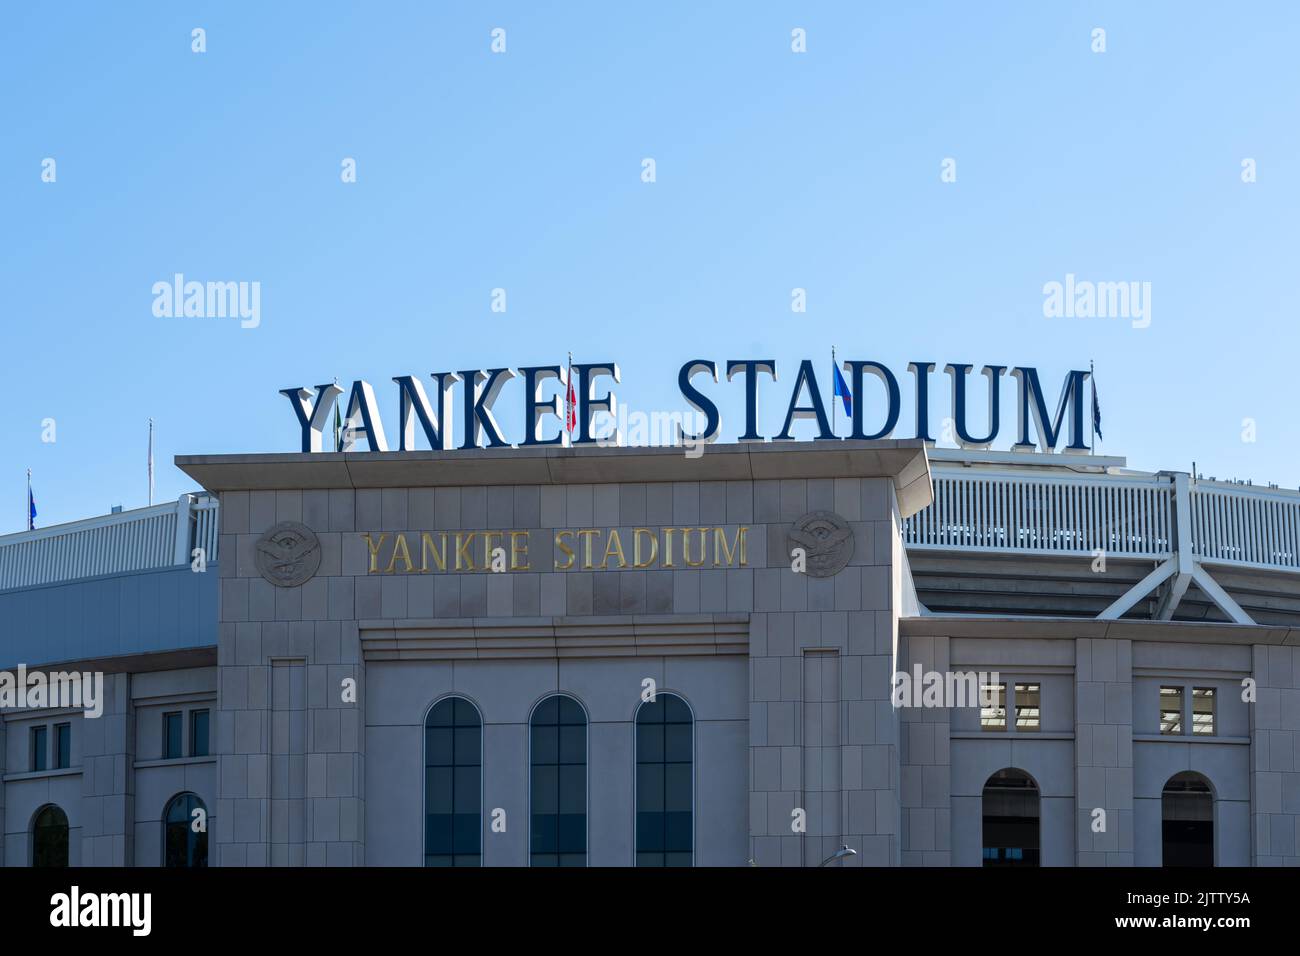 New York, NY, USA - August 19, 2022: Yankee Stadium sign is seen in New York, NY, USA, August 19, 2022. Stock Photo